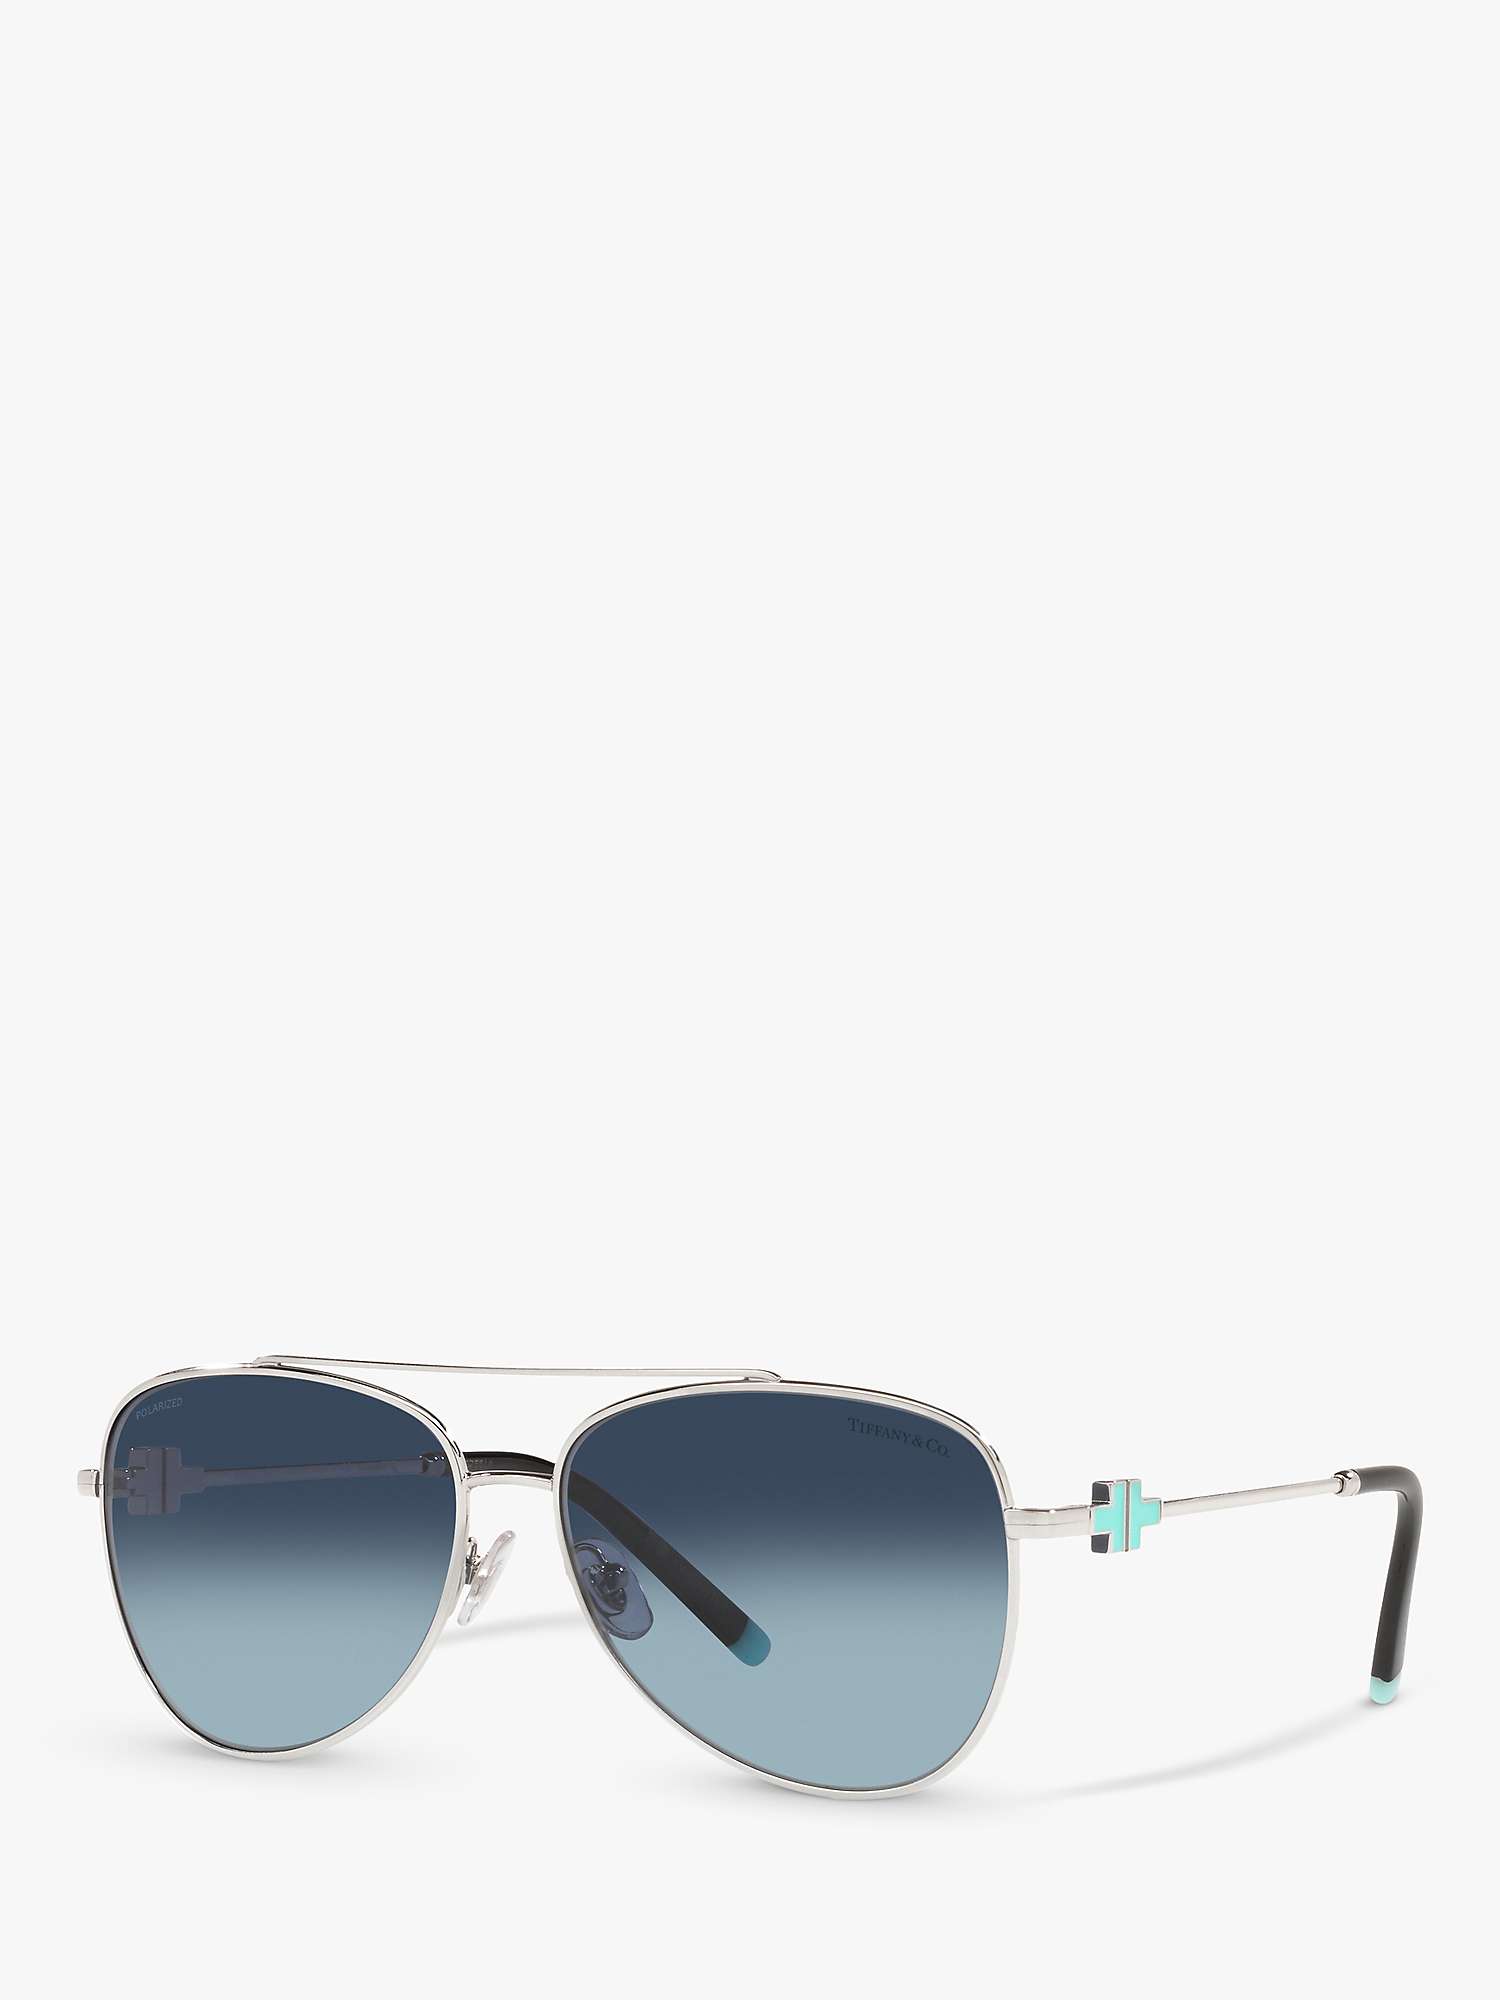 Buy Tiffany & Co TF3080 Women's Polarised Aviator Sunglasses, Silver/Blue Gradient Online at johnlewis.com